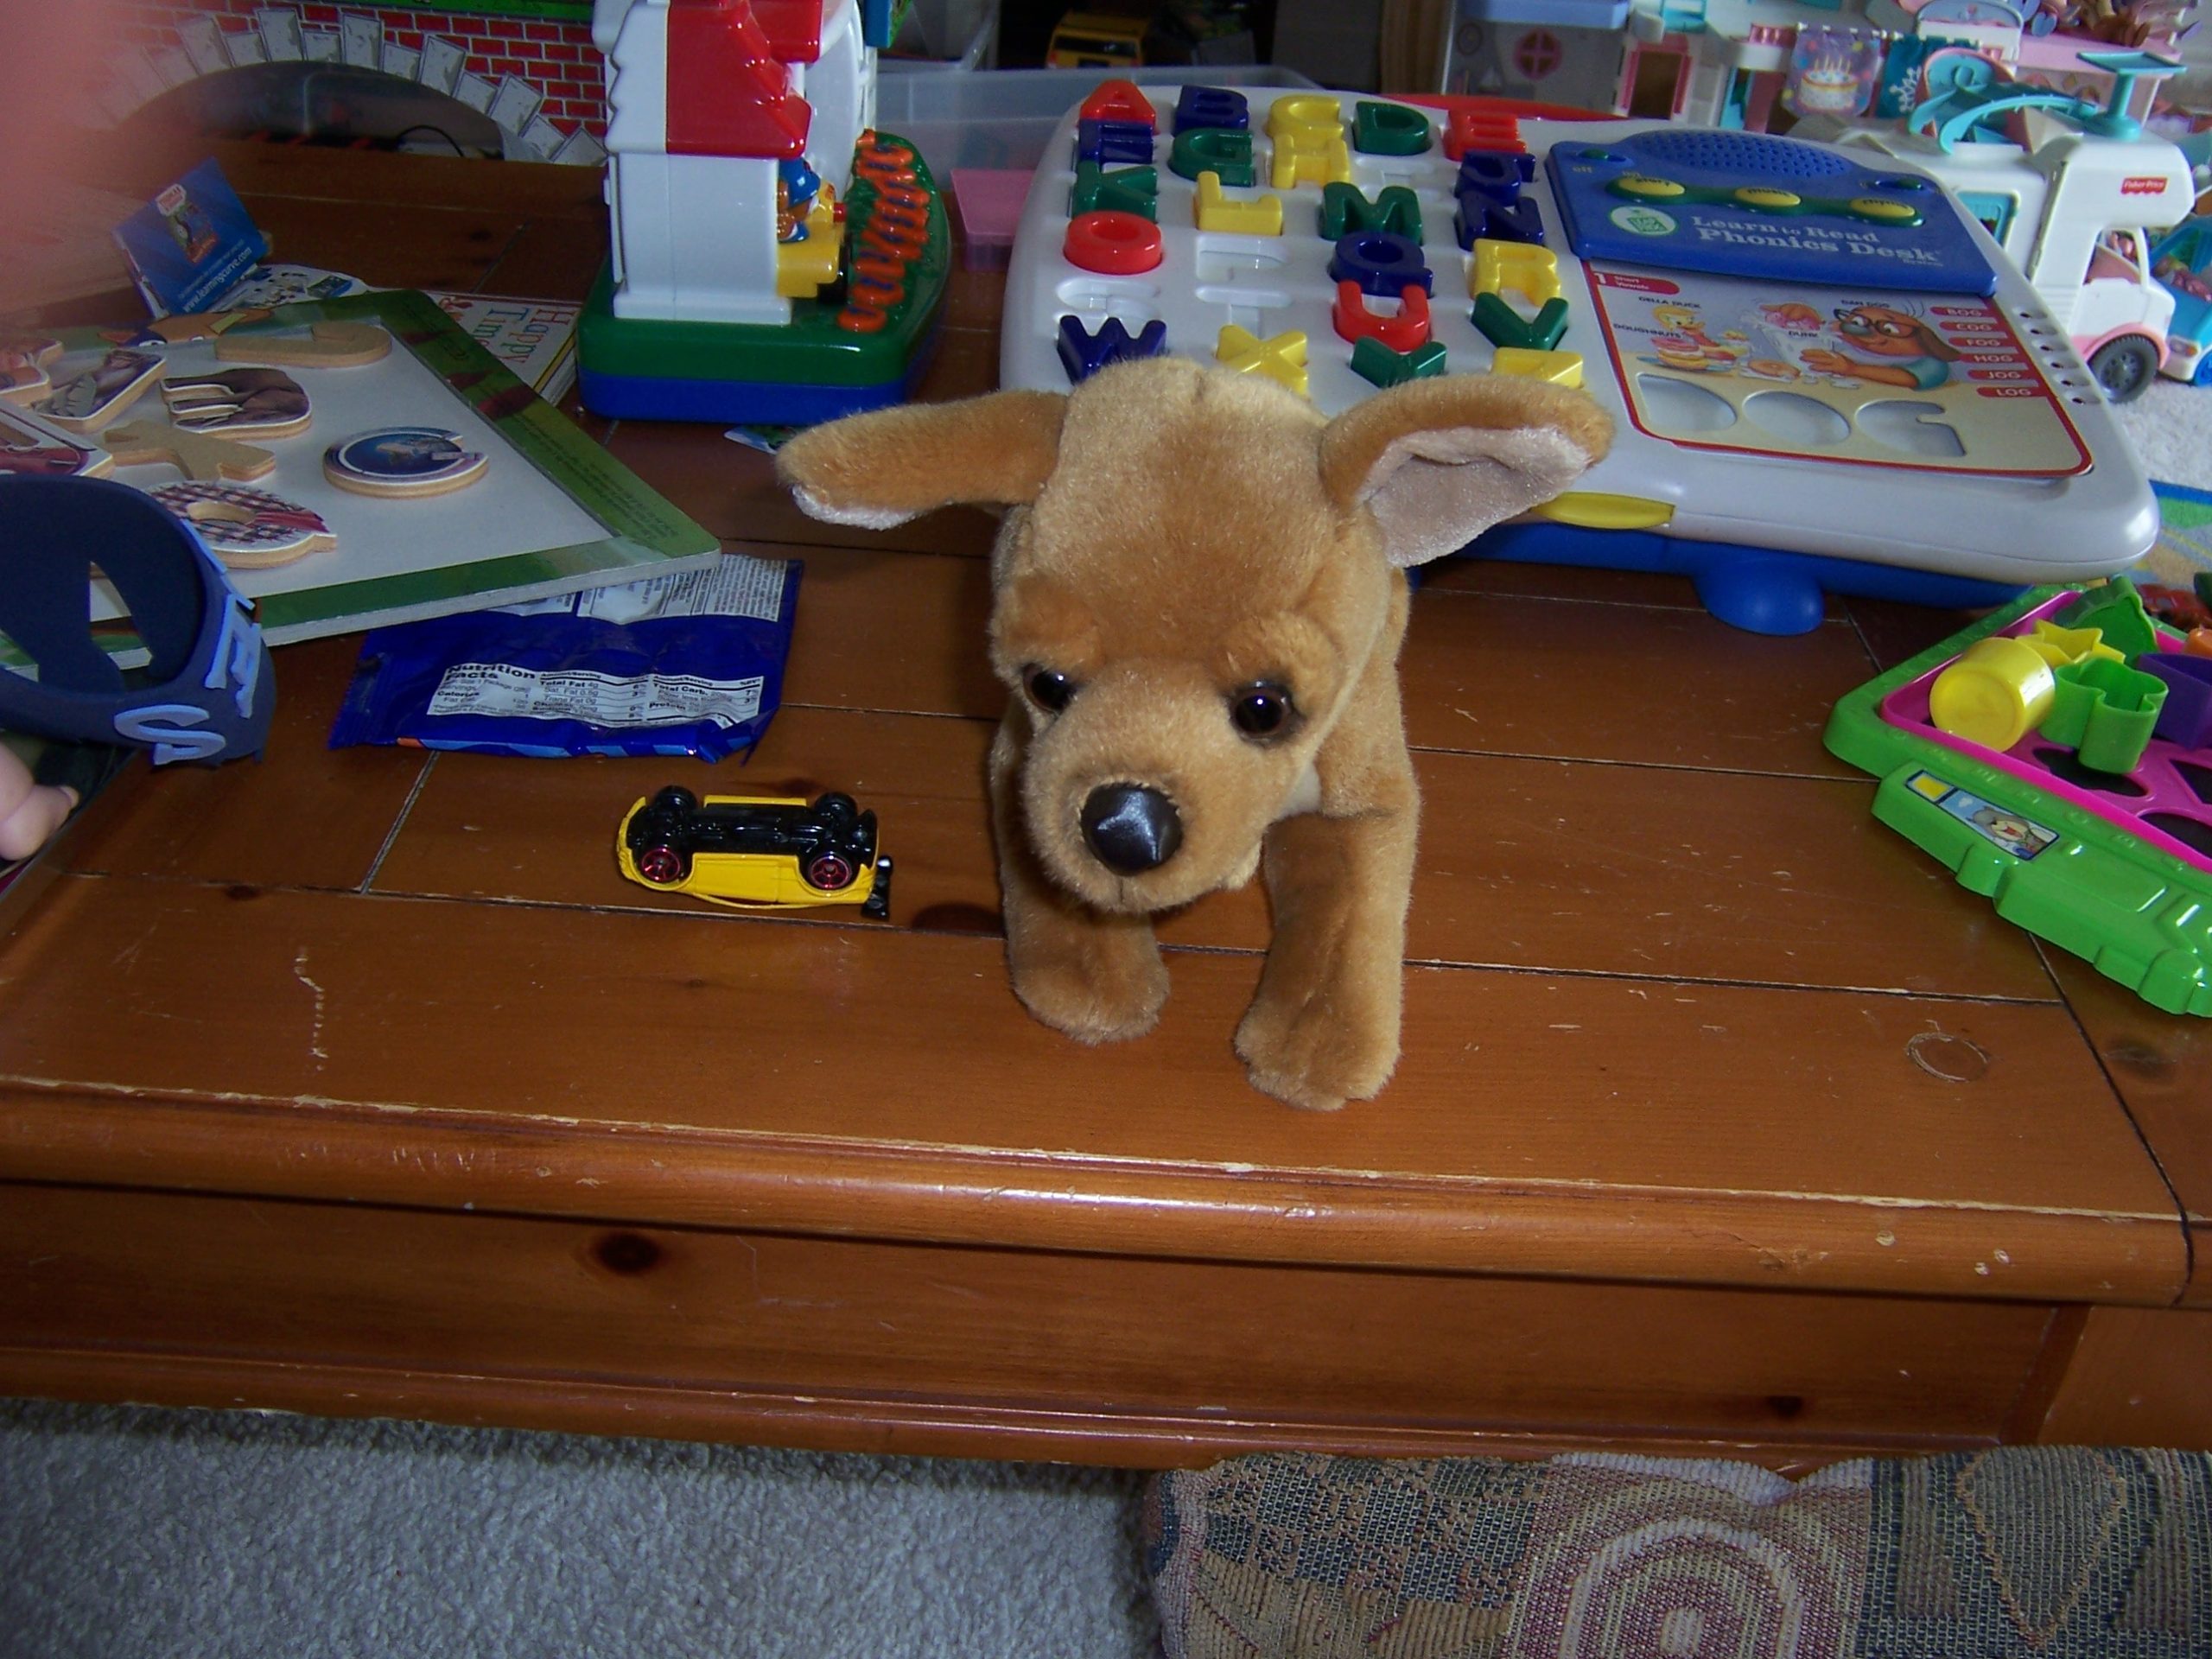 Preschool toys on a coffee table